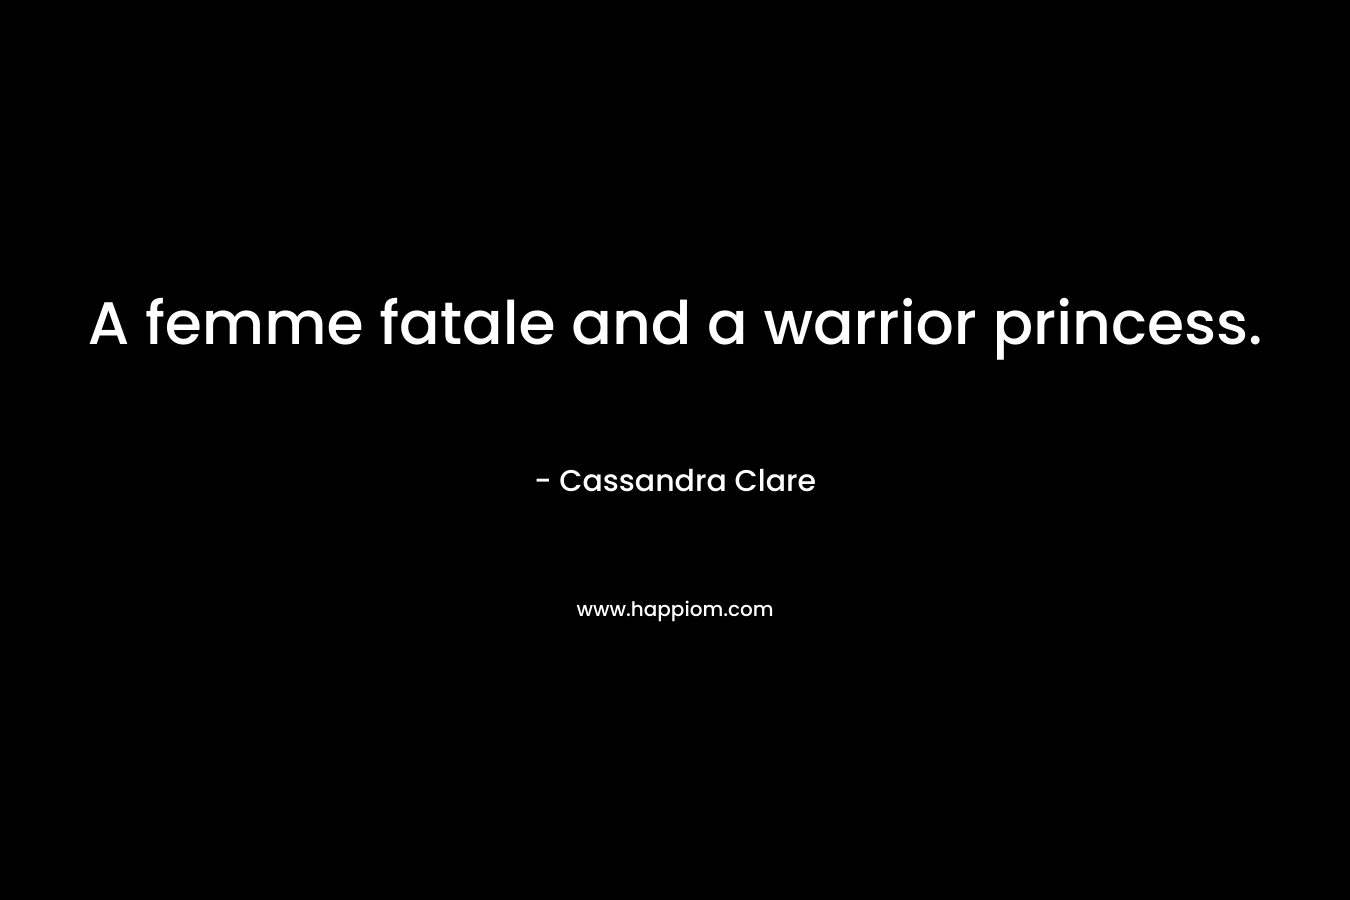 A femme fatale and a warrior princess.